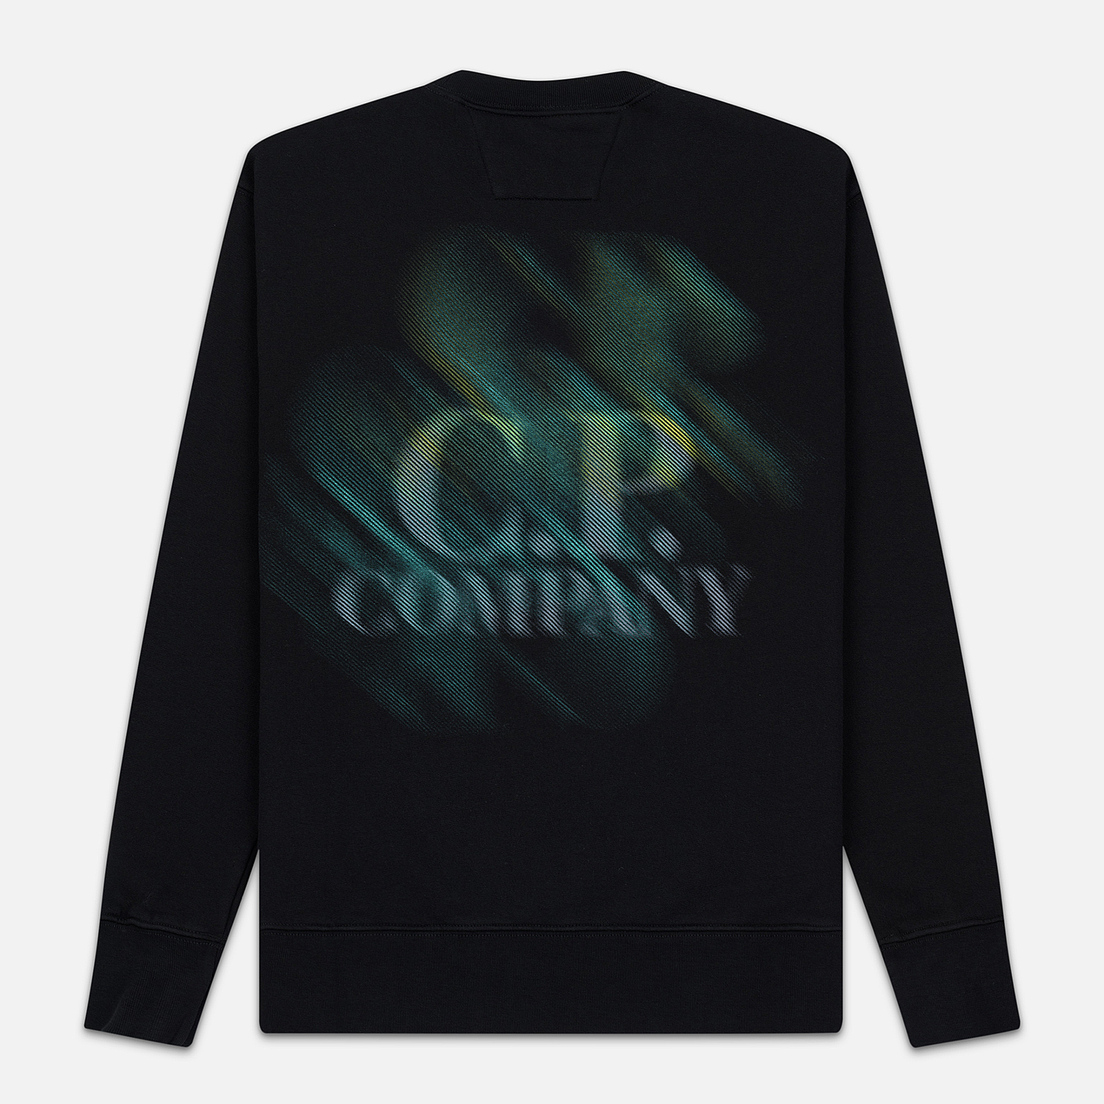 C.P. Company Мужская толстовка Blurred Graphic Logo